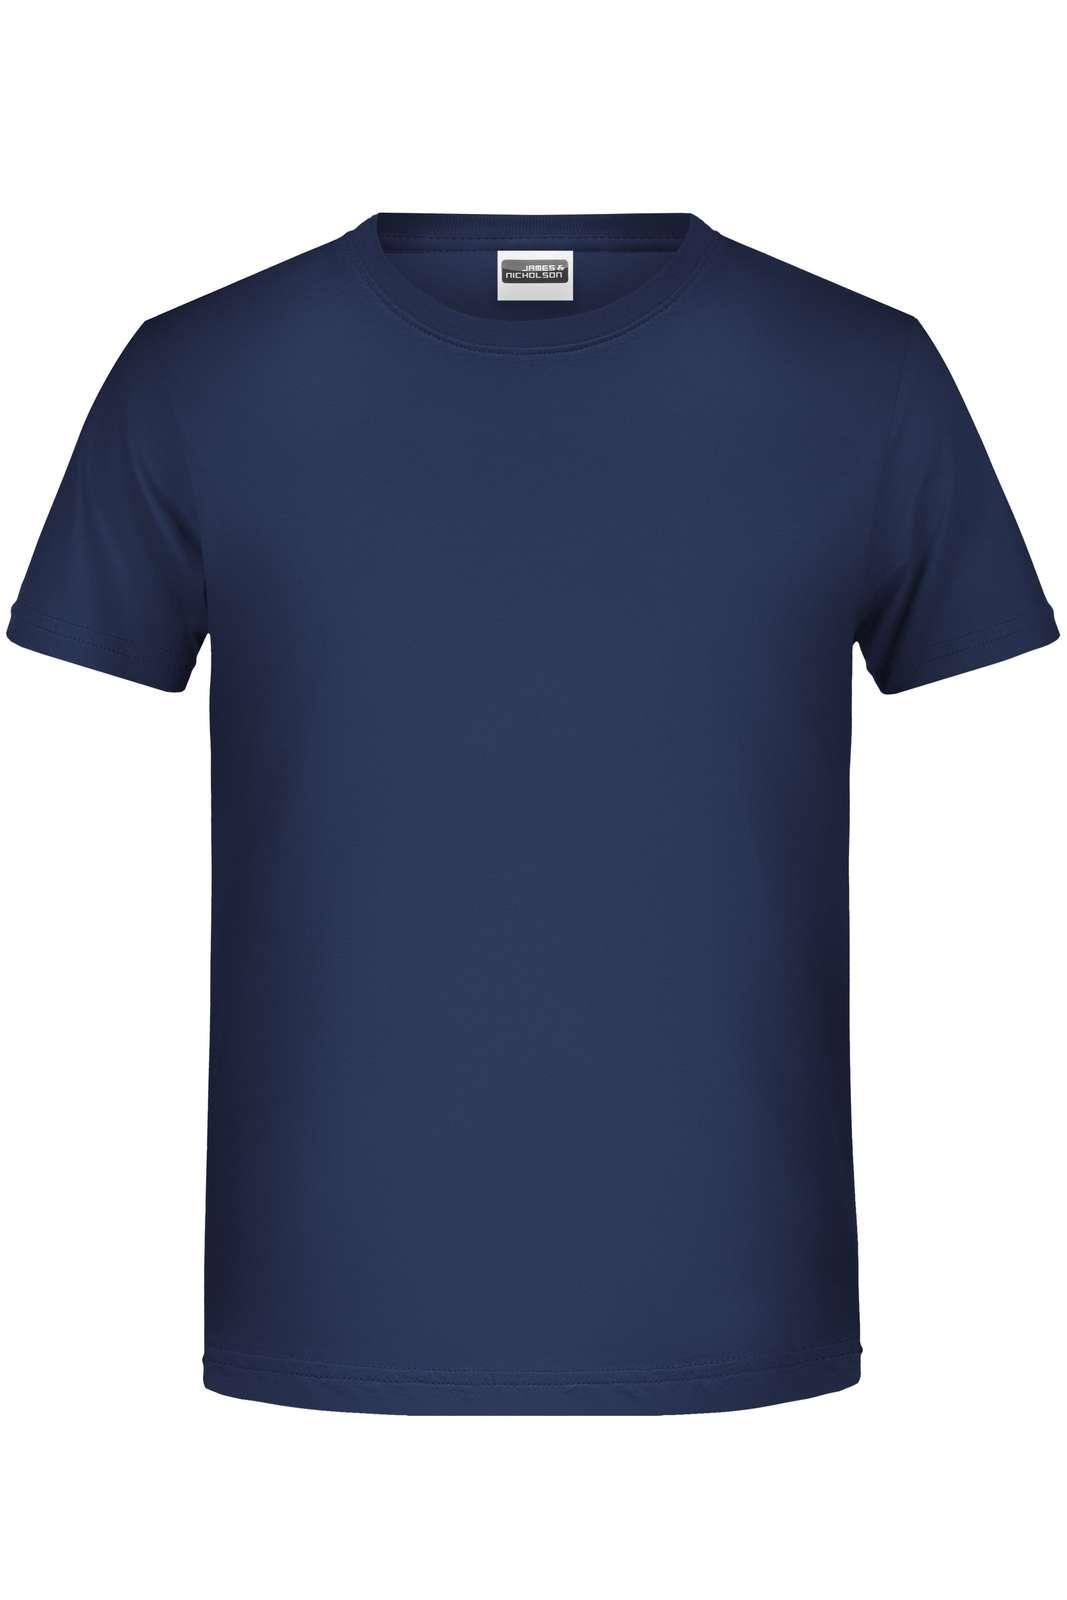 J&N BOYS' BASIC-T - T-Shirt - JA Profil 